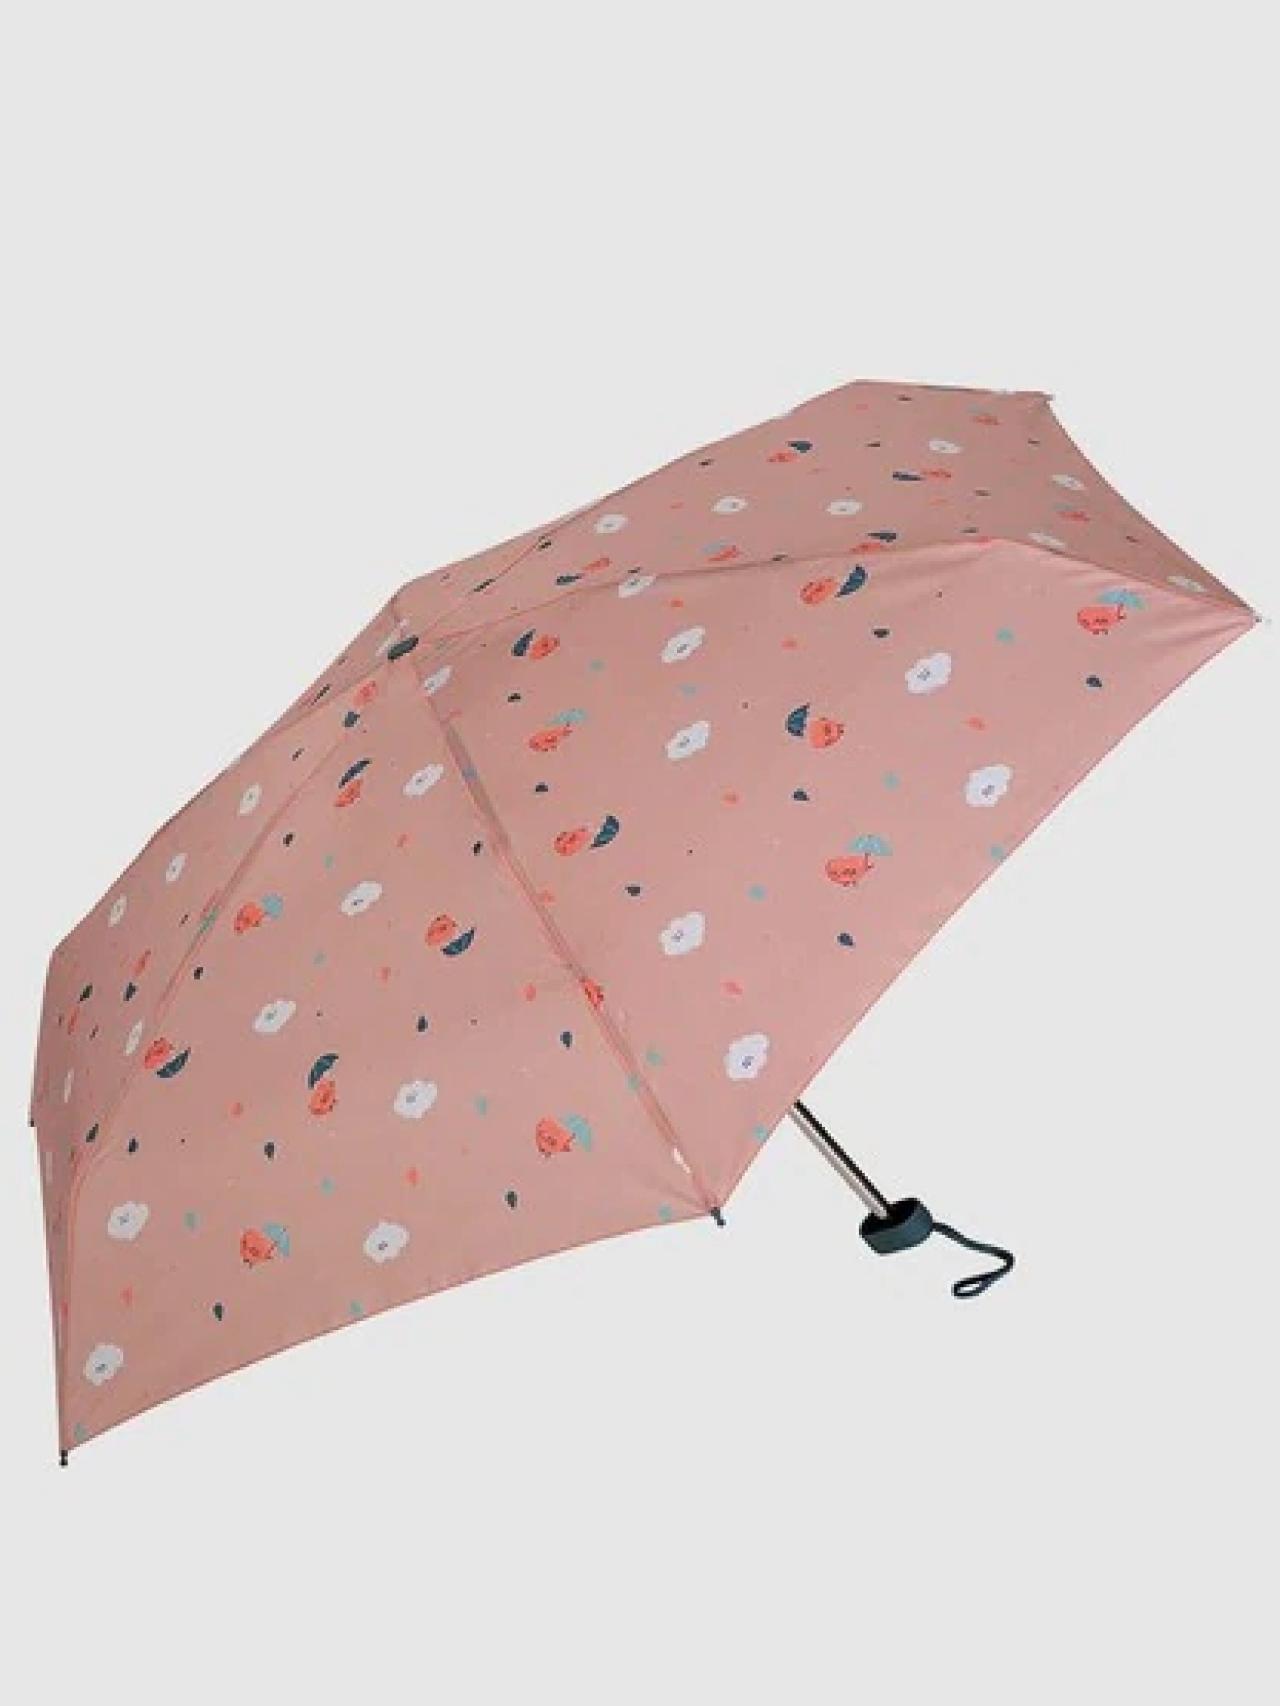 Los 8 mejores paraguas para protegerte de la lluvia